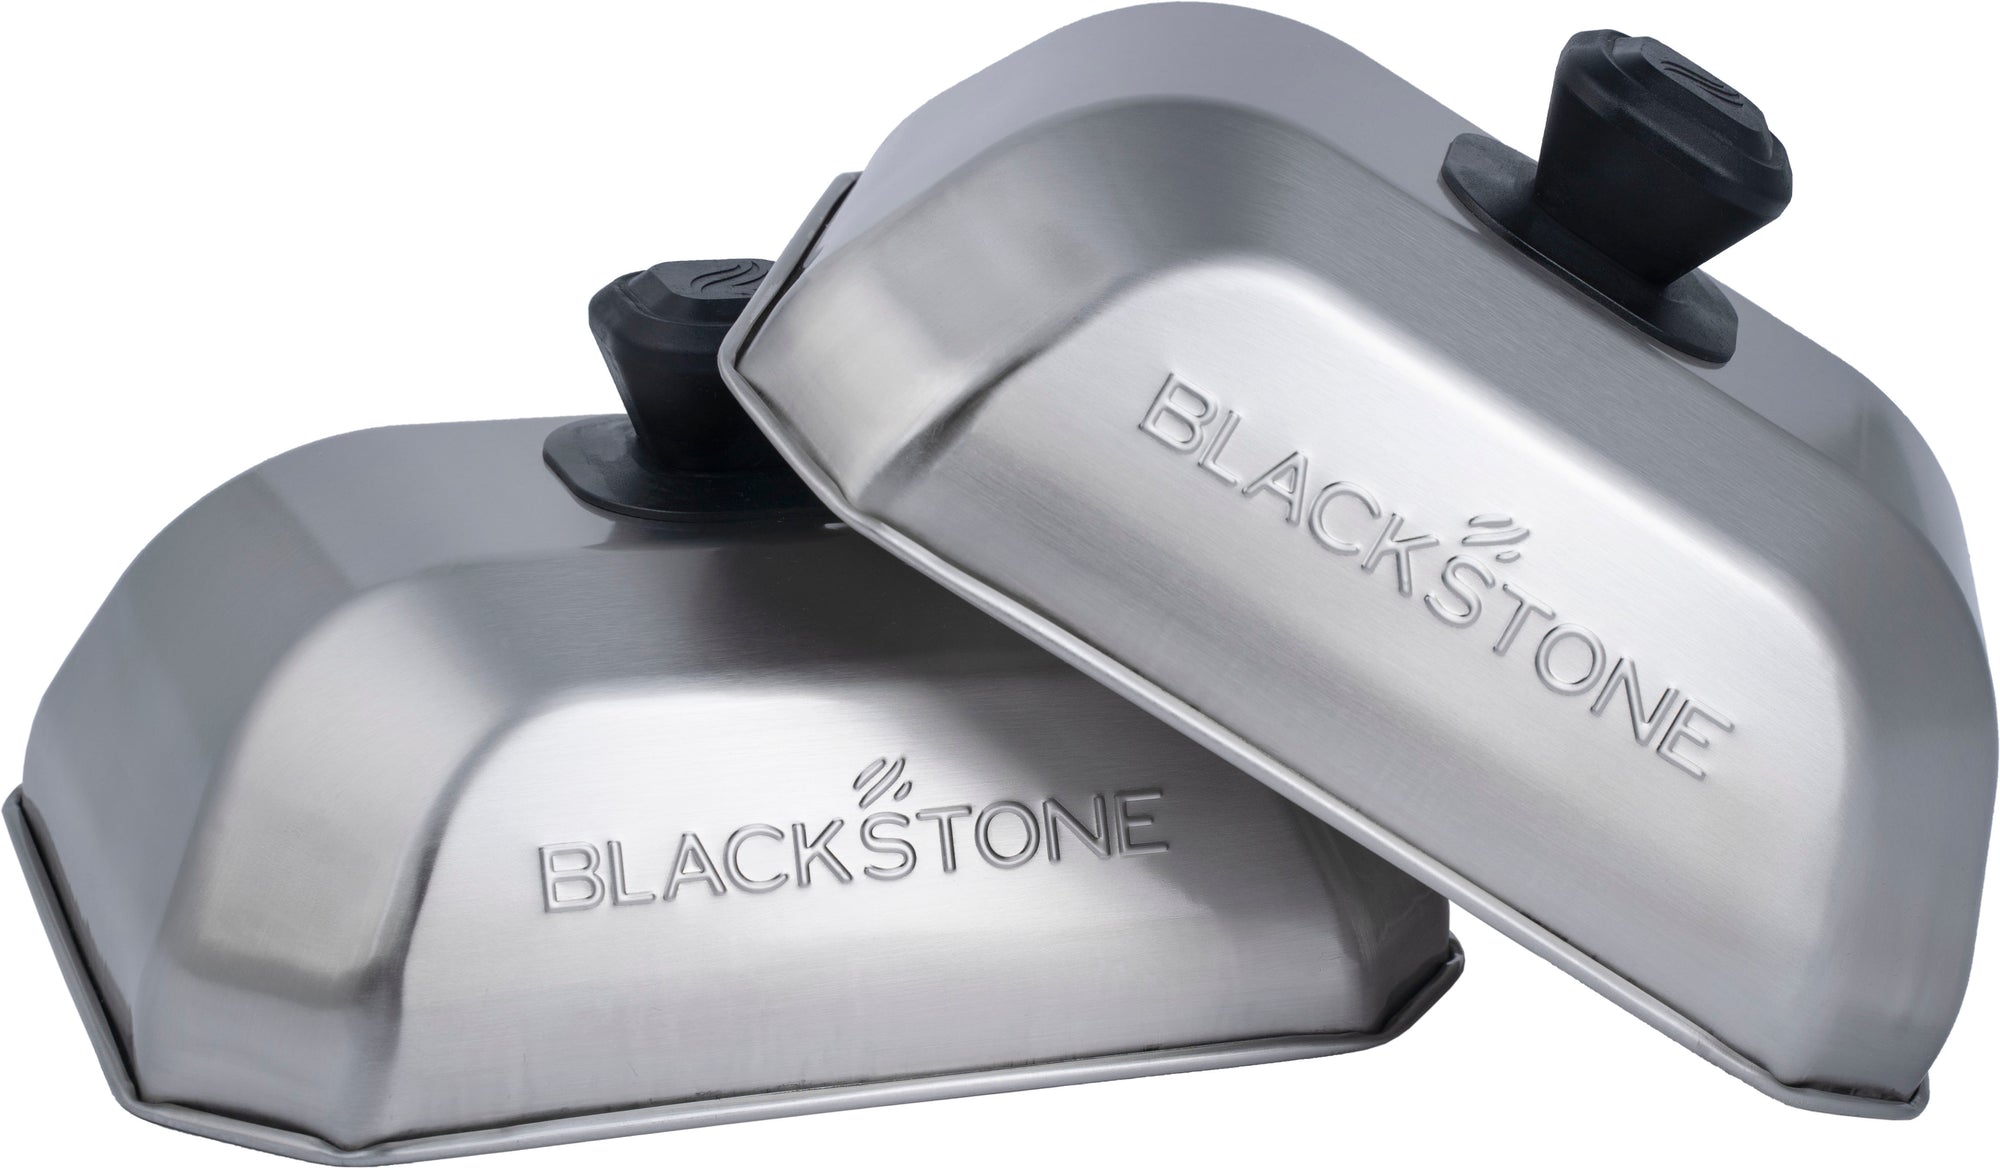 Blackstone 5207 Small Rectangular Basting Cover - 2-Pack